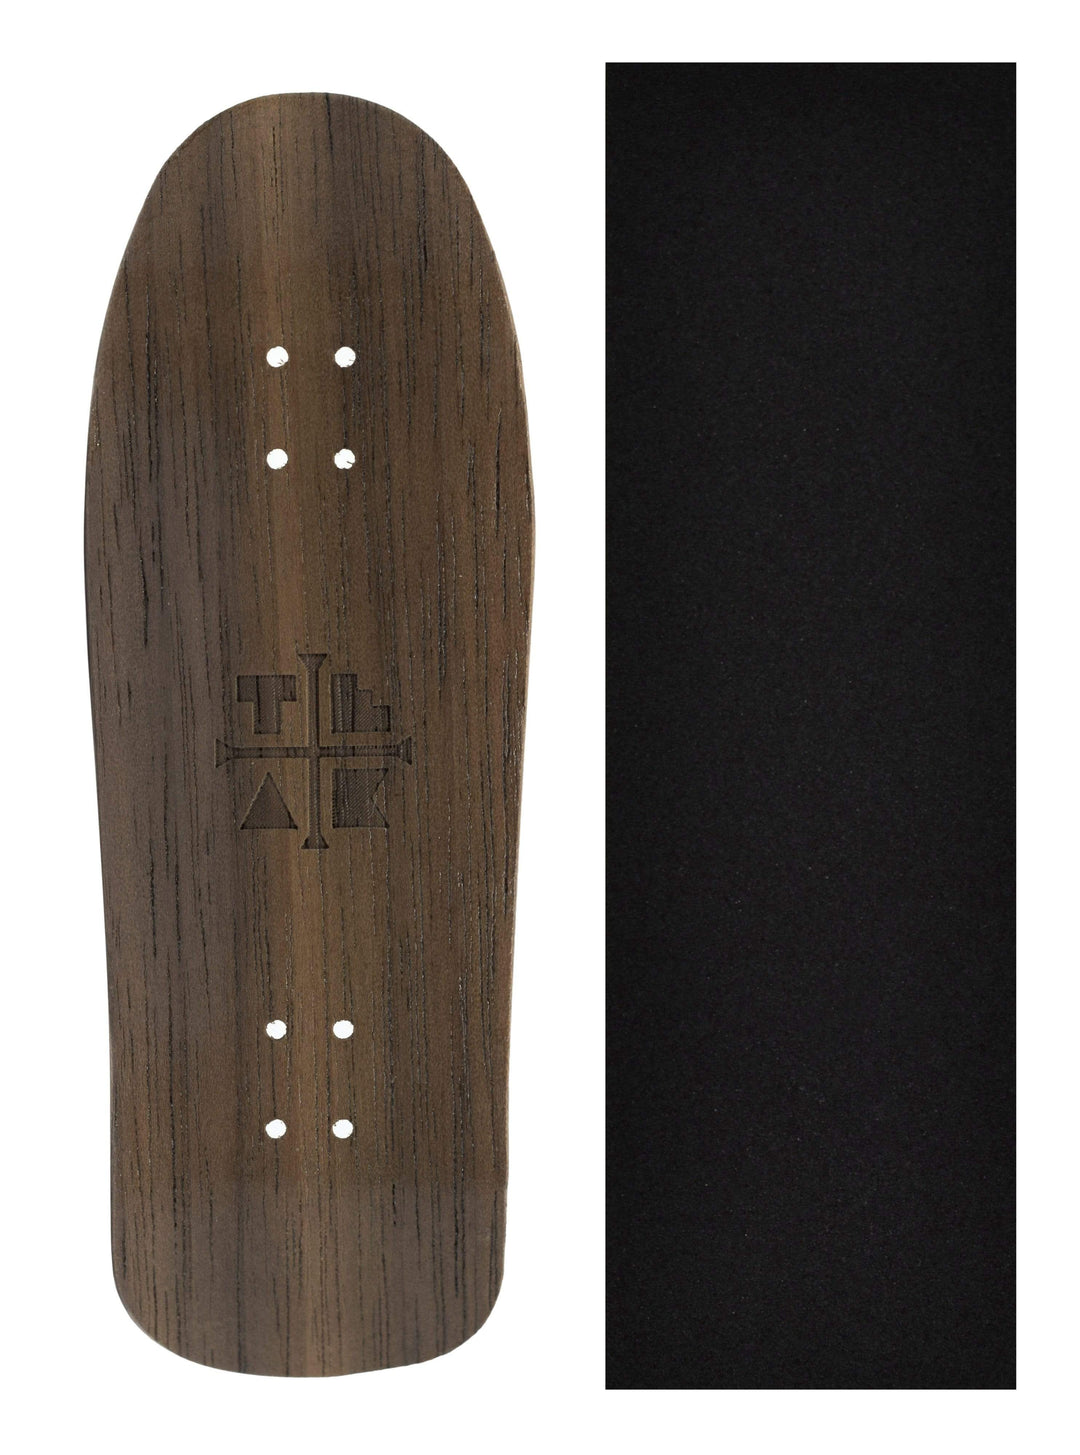 Teak Tuning Carlsbad Cruiser Wooden Fingerboard Deck, "The Swanson" - 34mm x 100mm